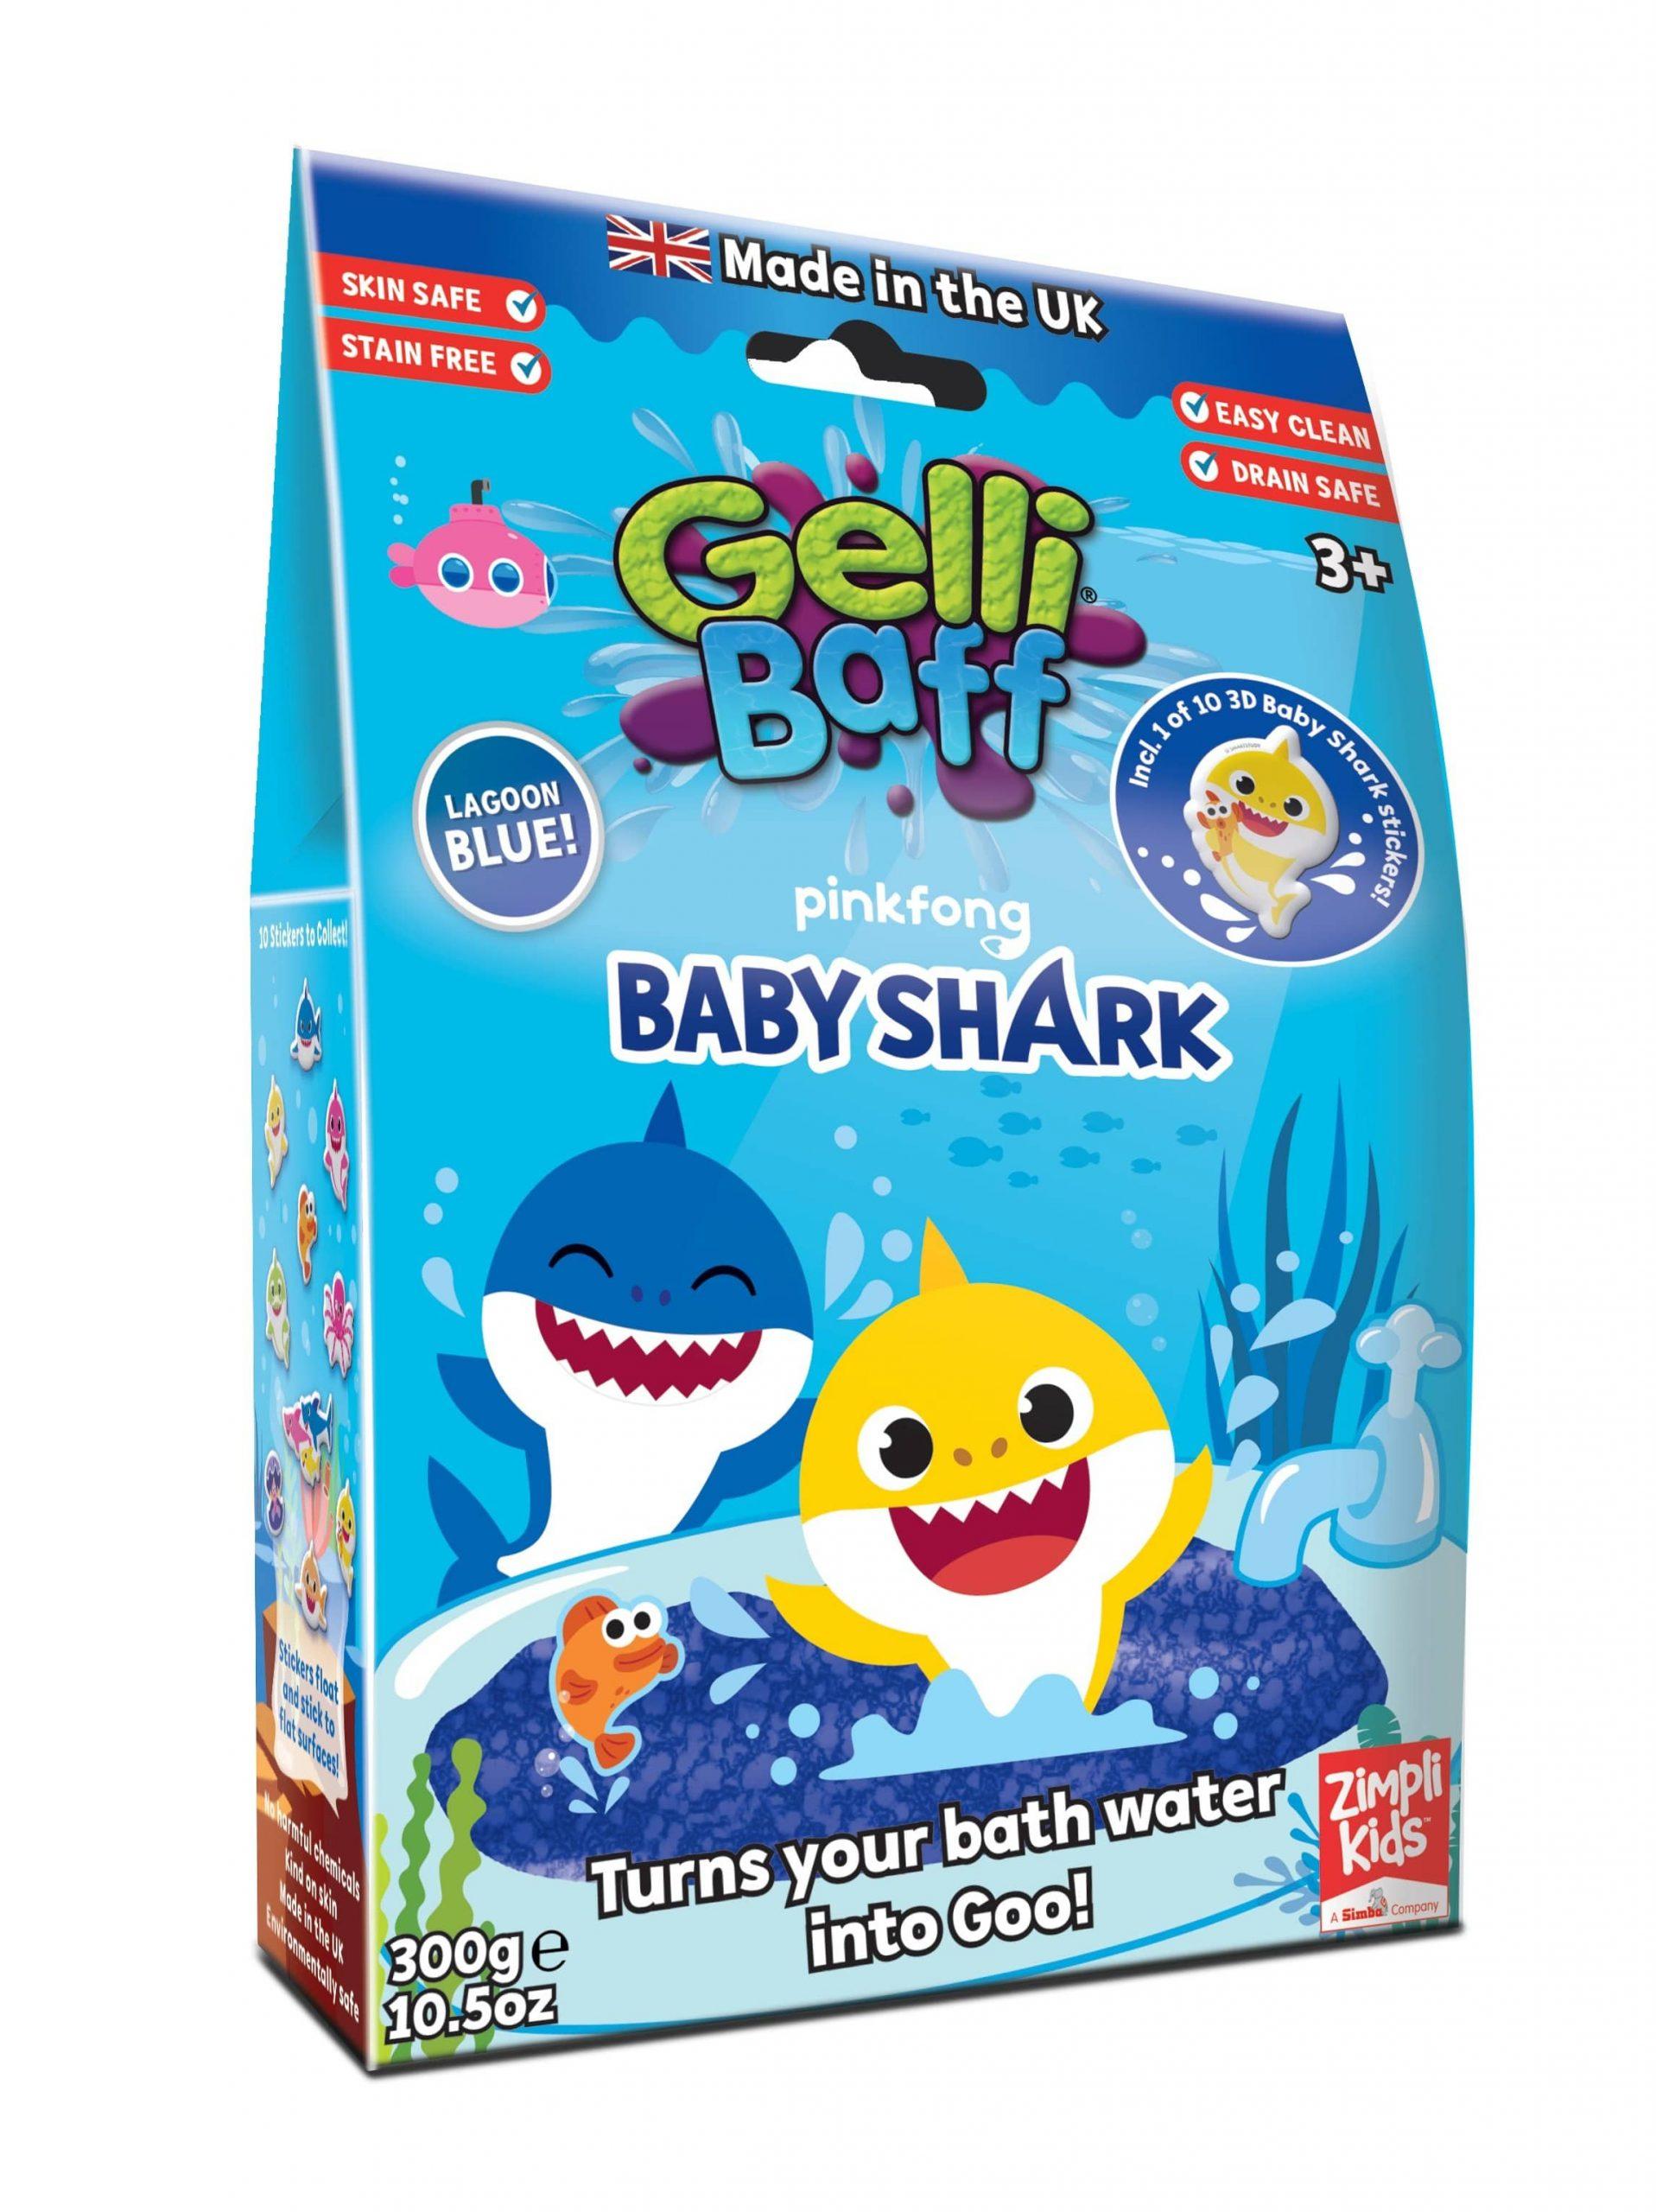 glibbi-Zimpli kids baby shark gelli baff blue 300g